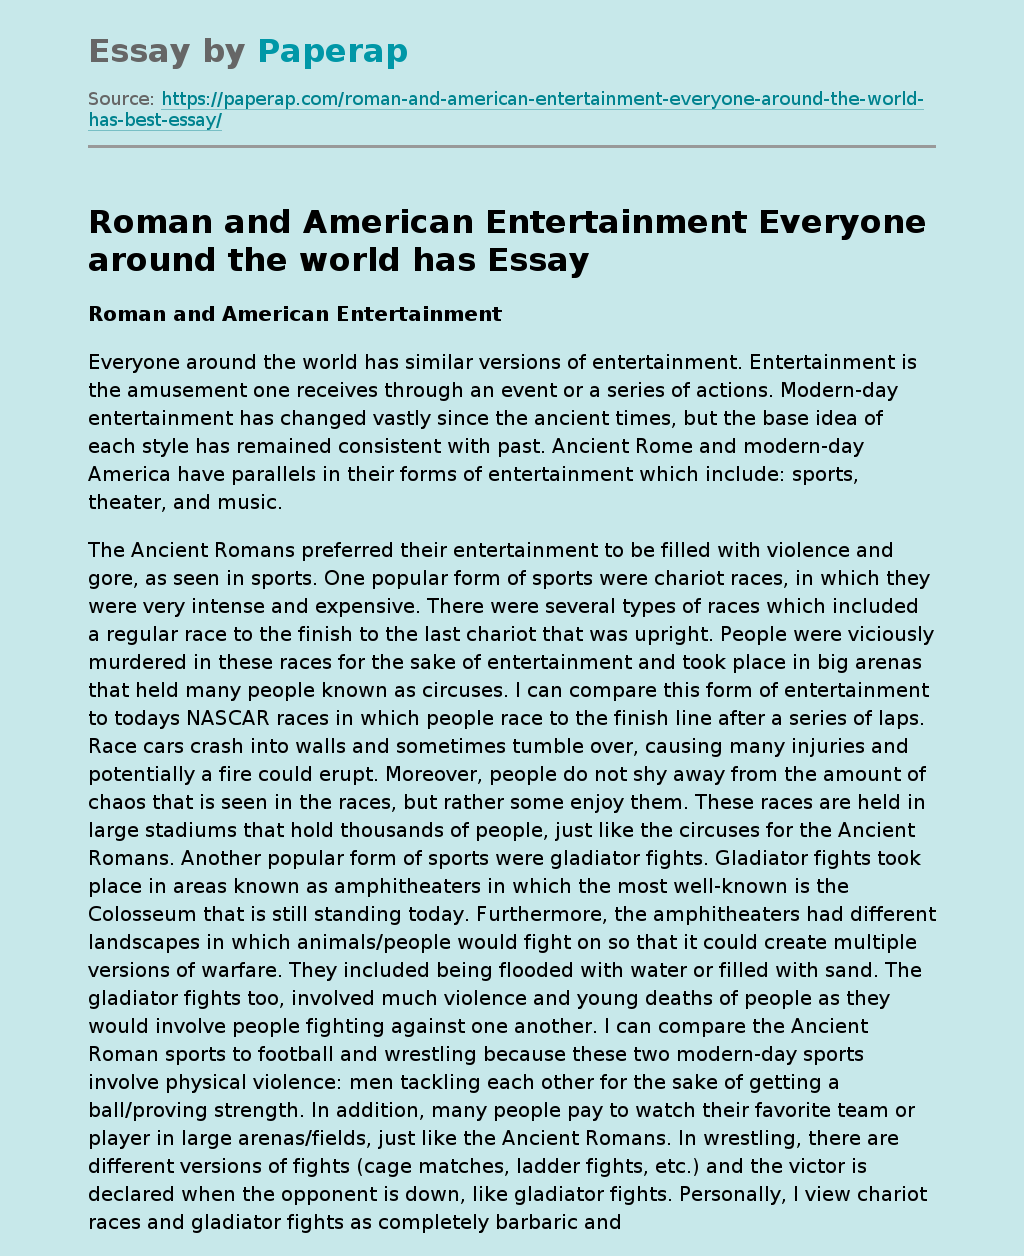 Roman and American Entertainment